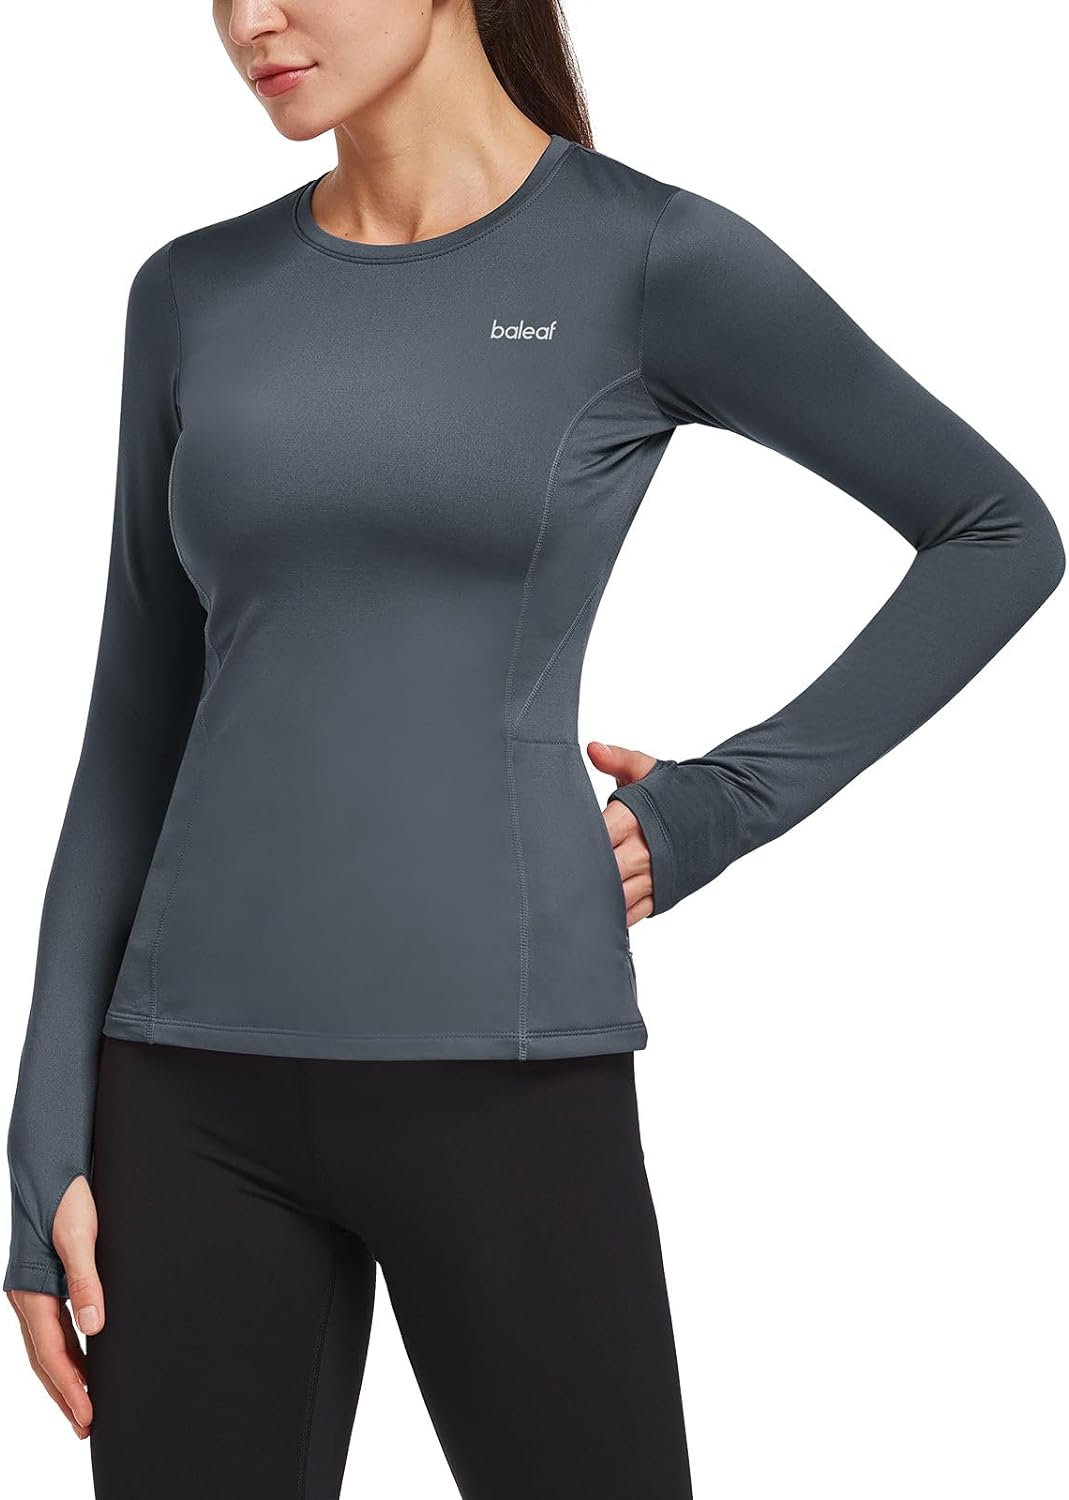 BALEAF Women's Thermal Fleece Tops Long Sleeve Running Shirt with